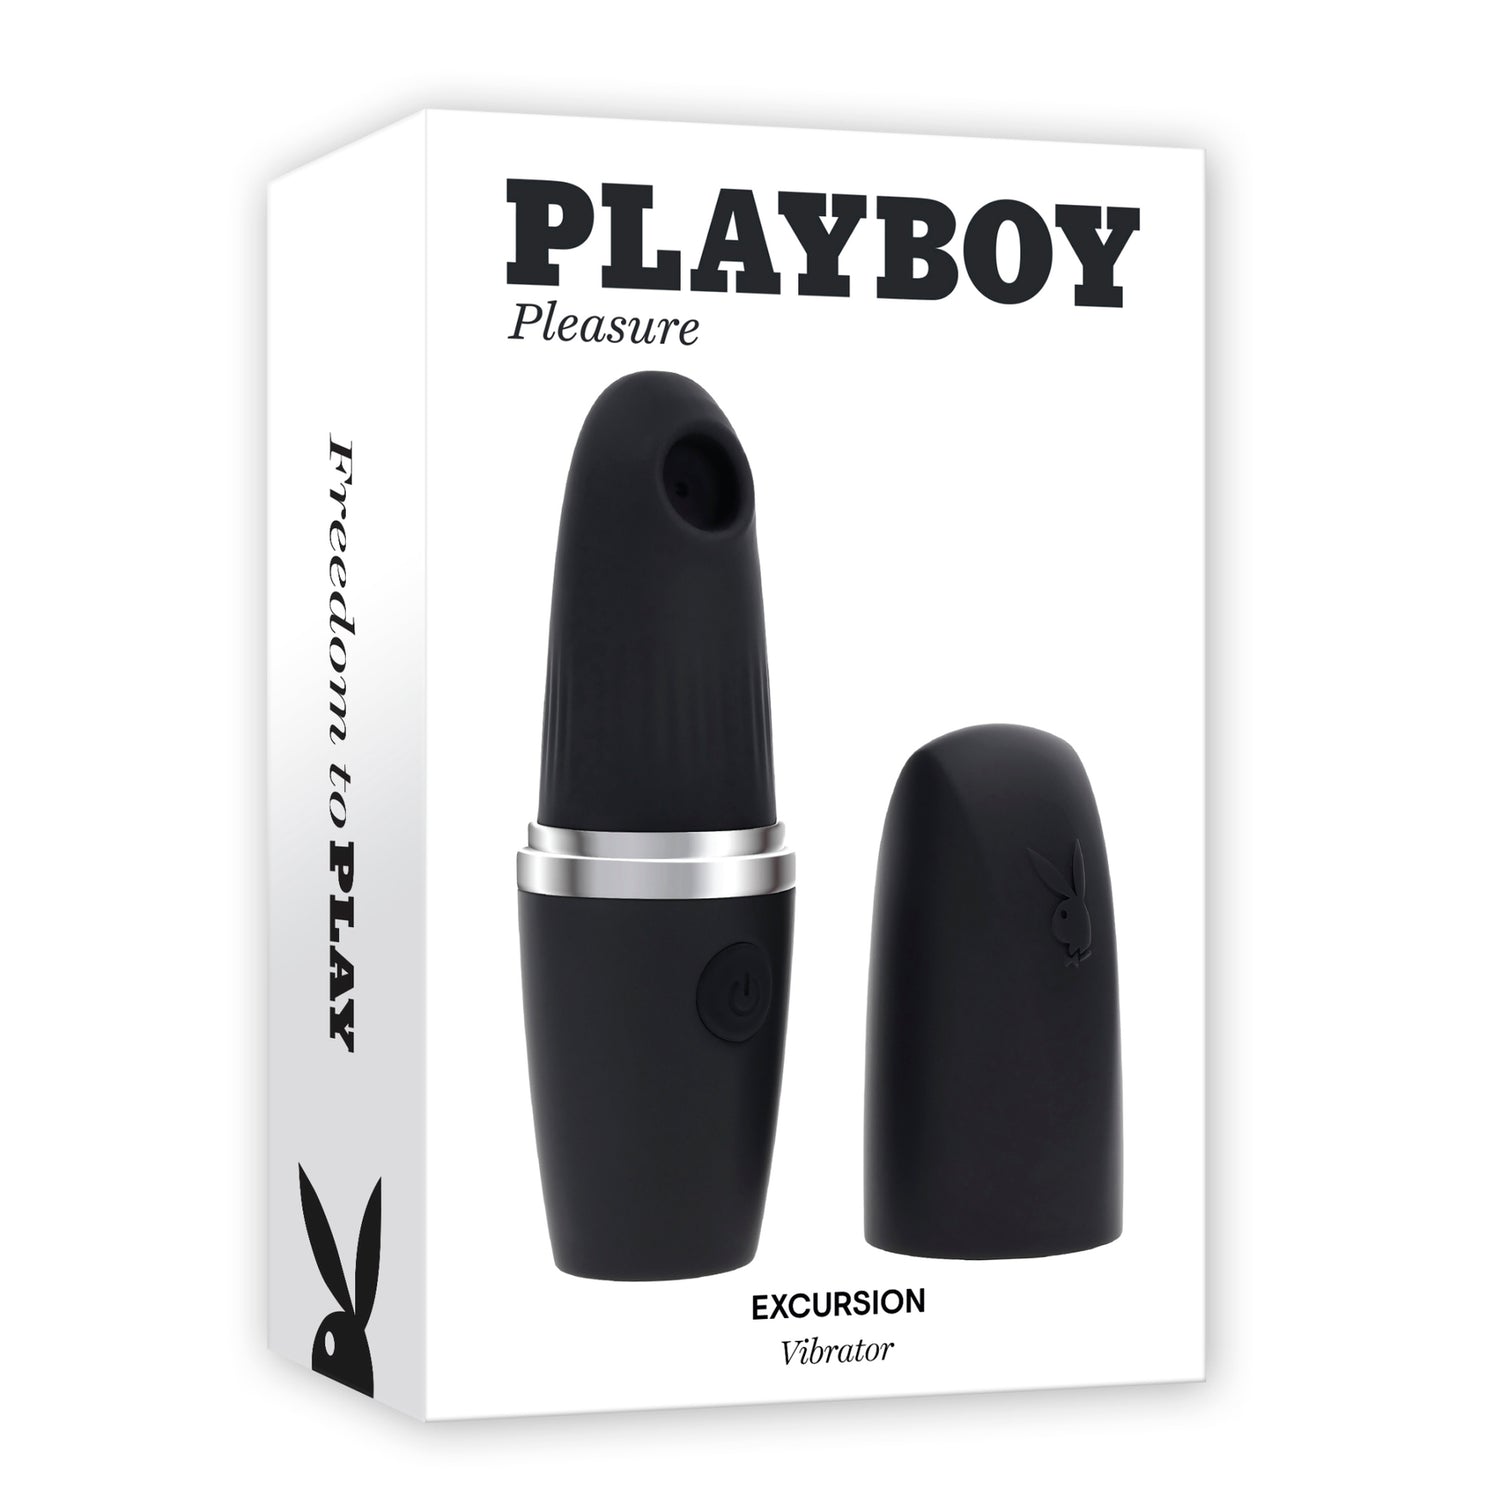 Playboy Excursion